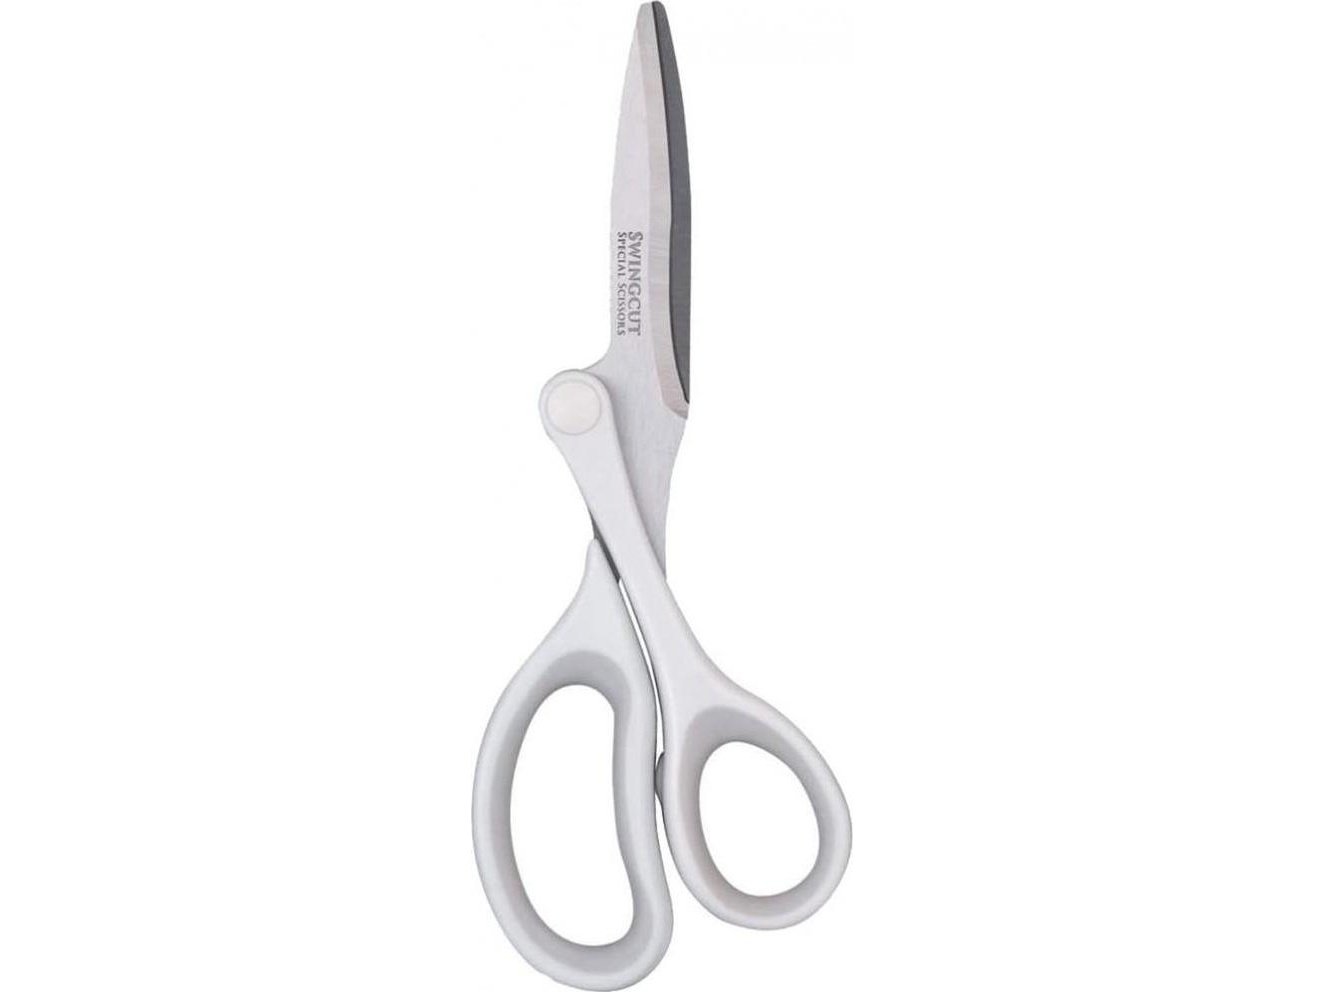 Raymay Swing Cut Scissors Standard